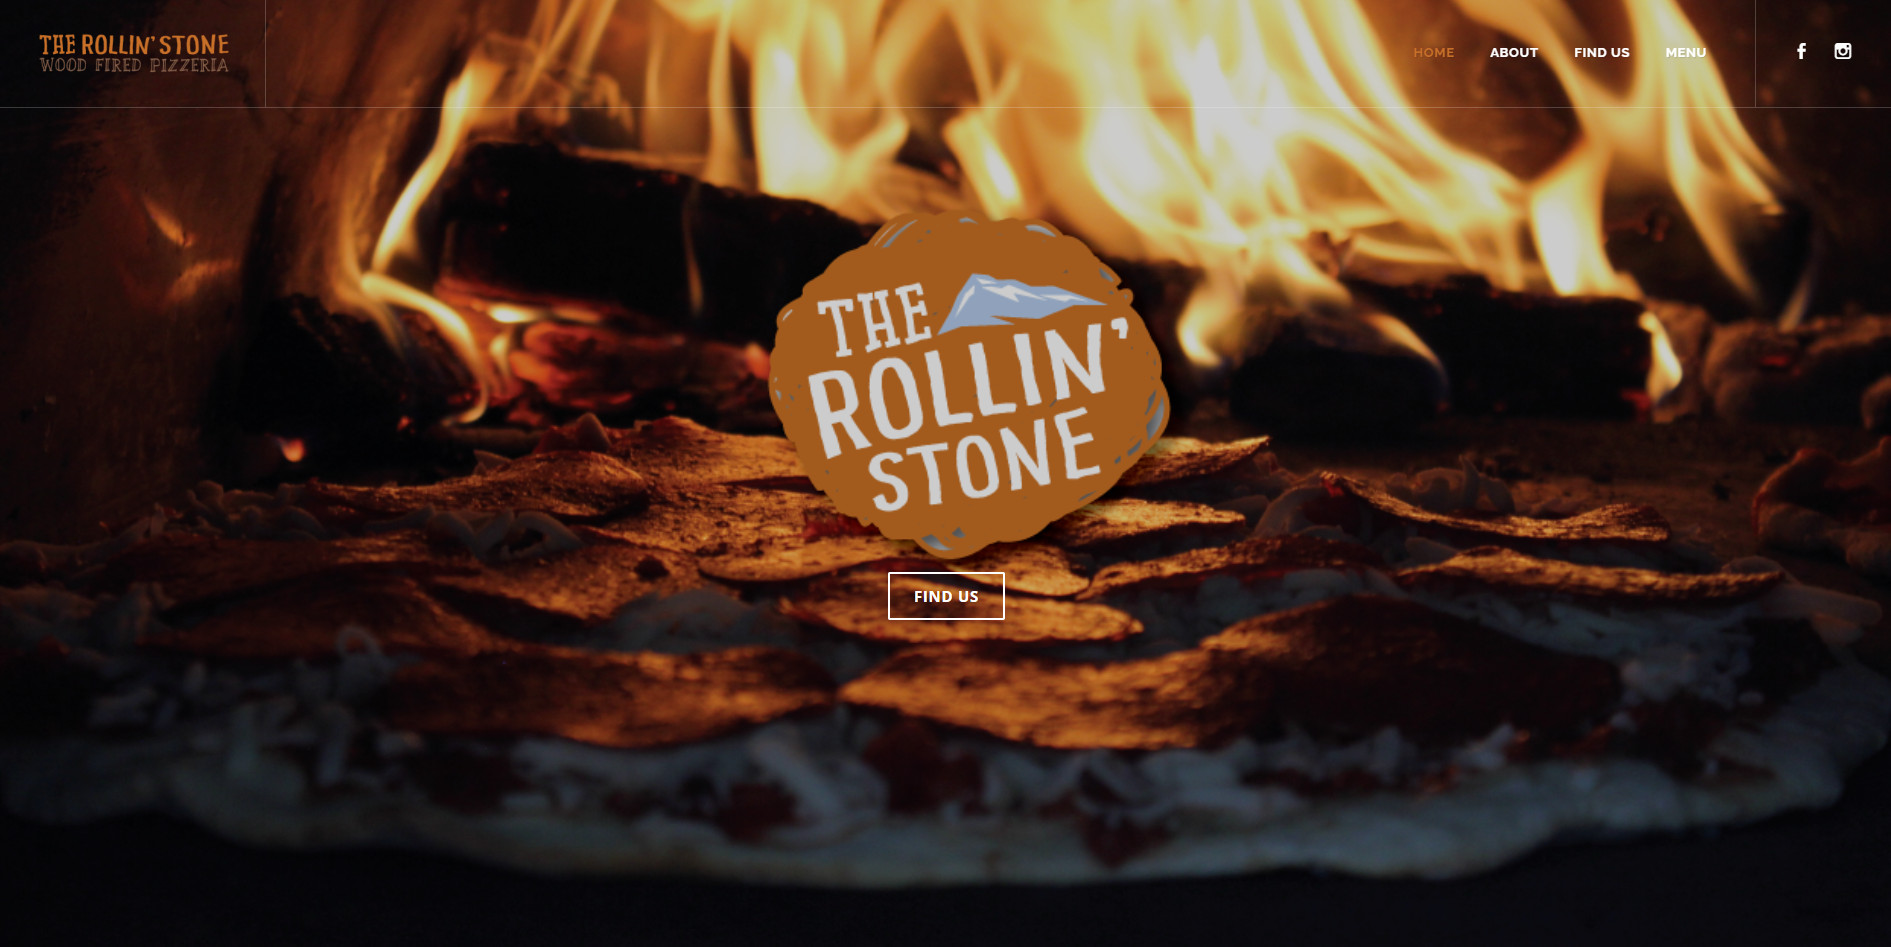 food truck ideas - the rollin stone